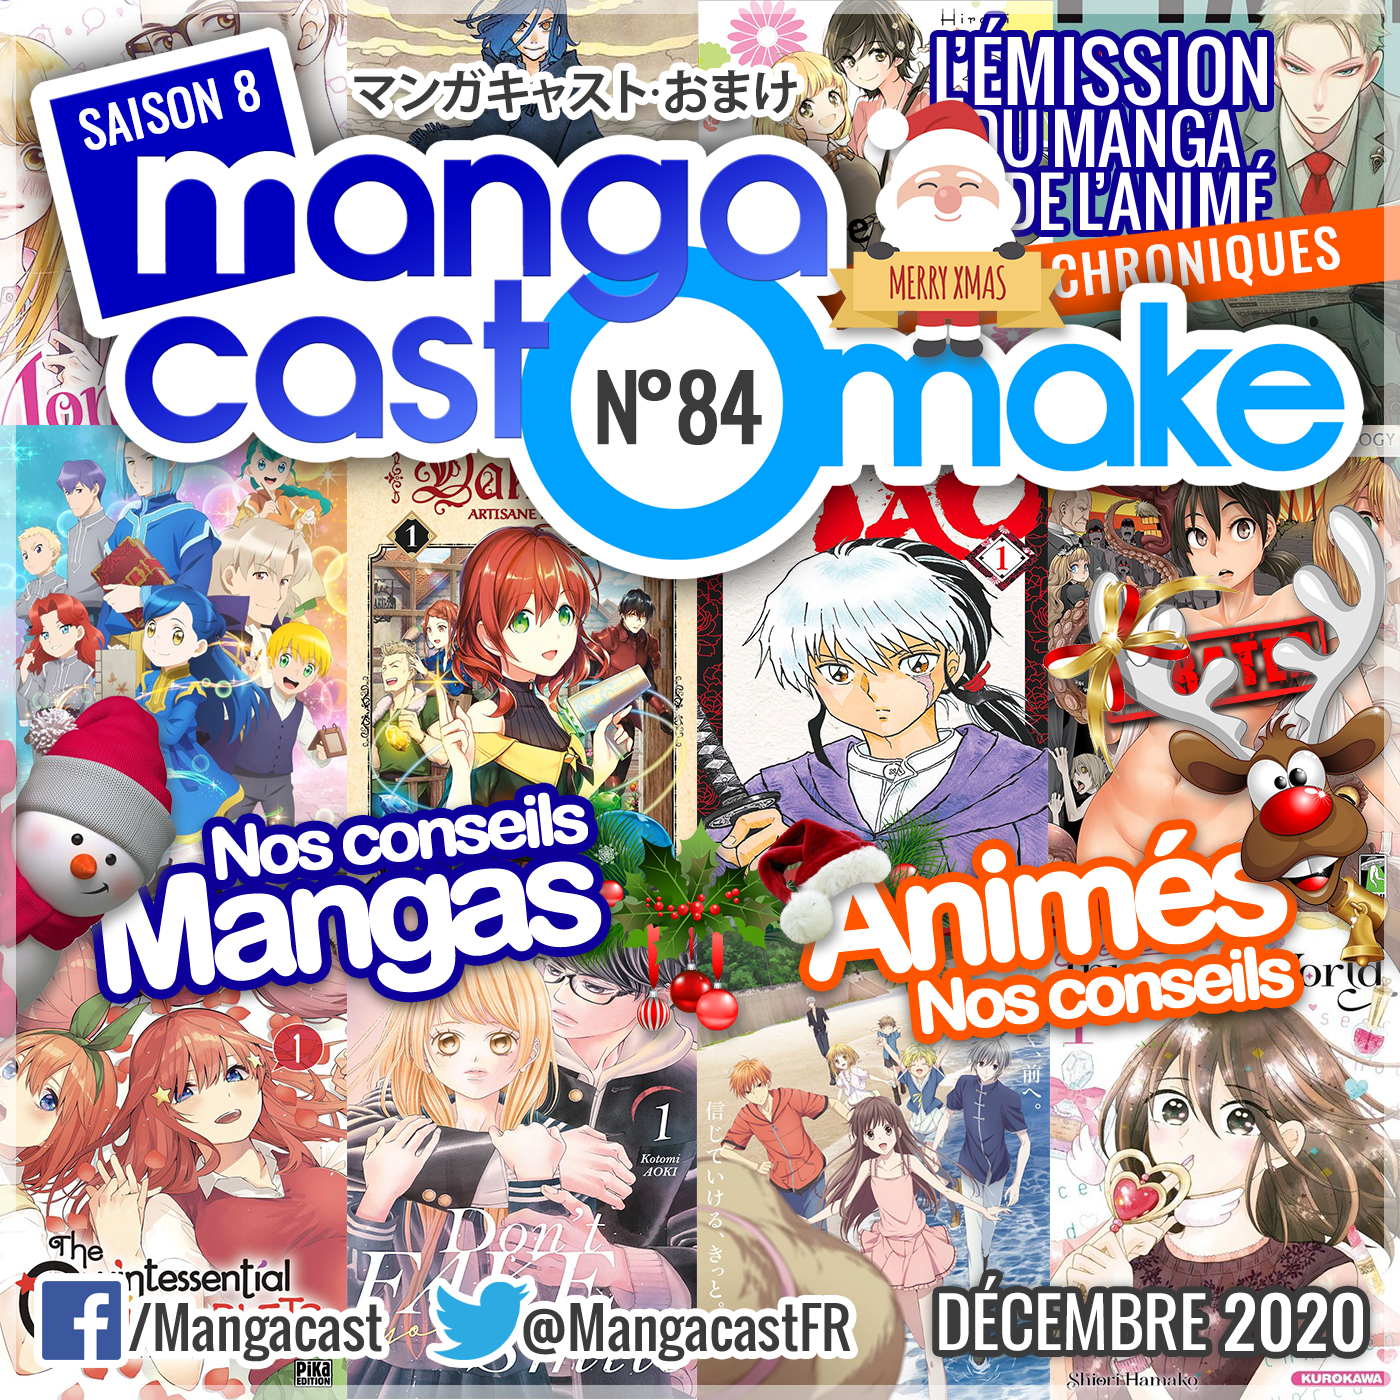 Cartouche du Mangacast Omake 84